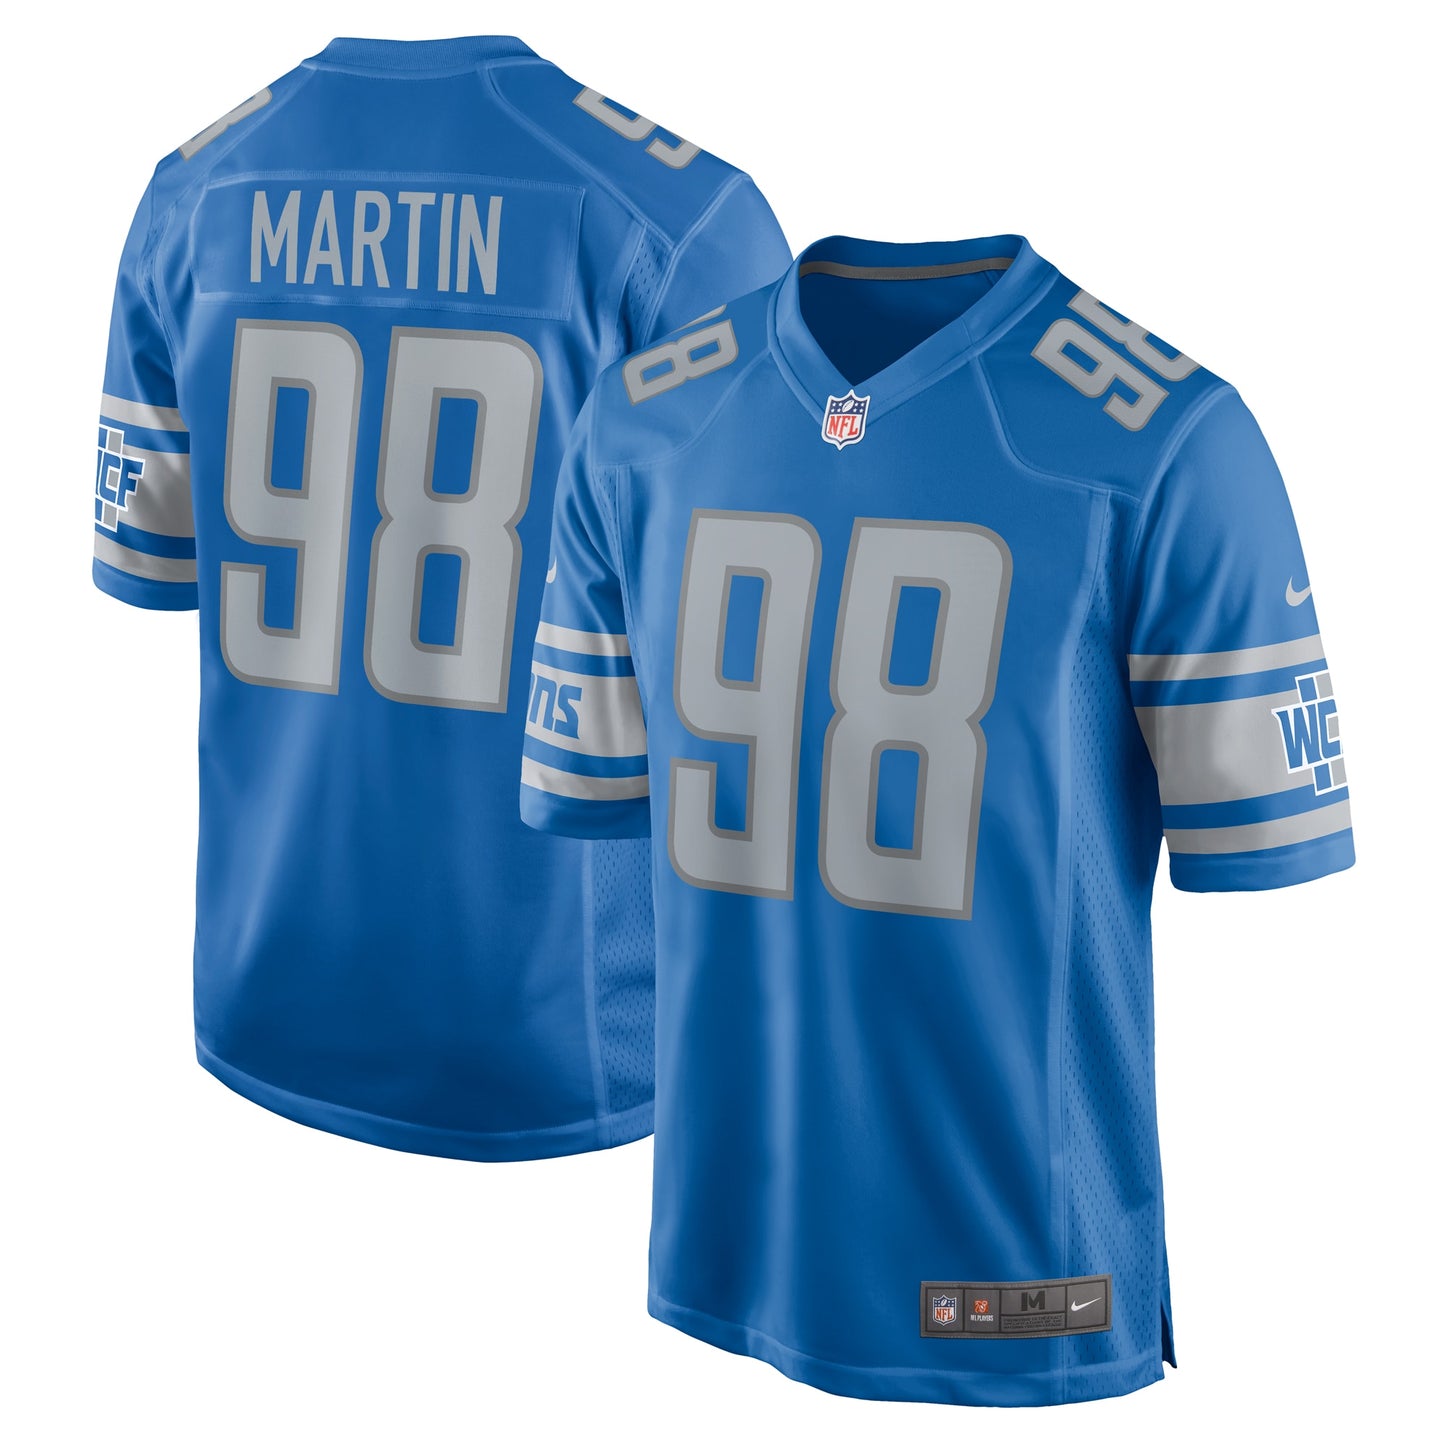 Brodric Martin Detroit Lions Nike Team Game Jersey - Blue